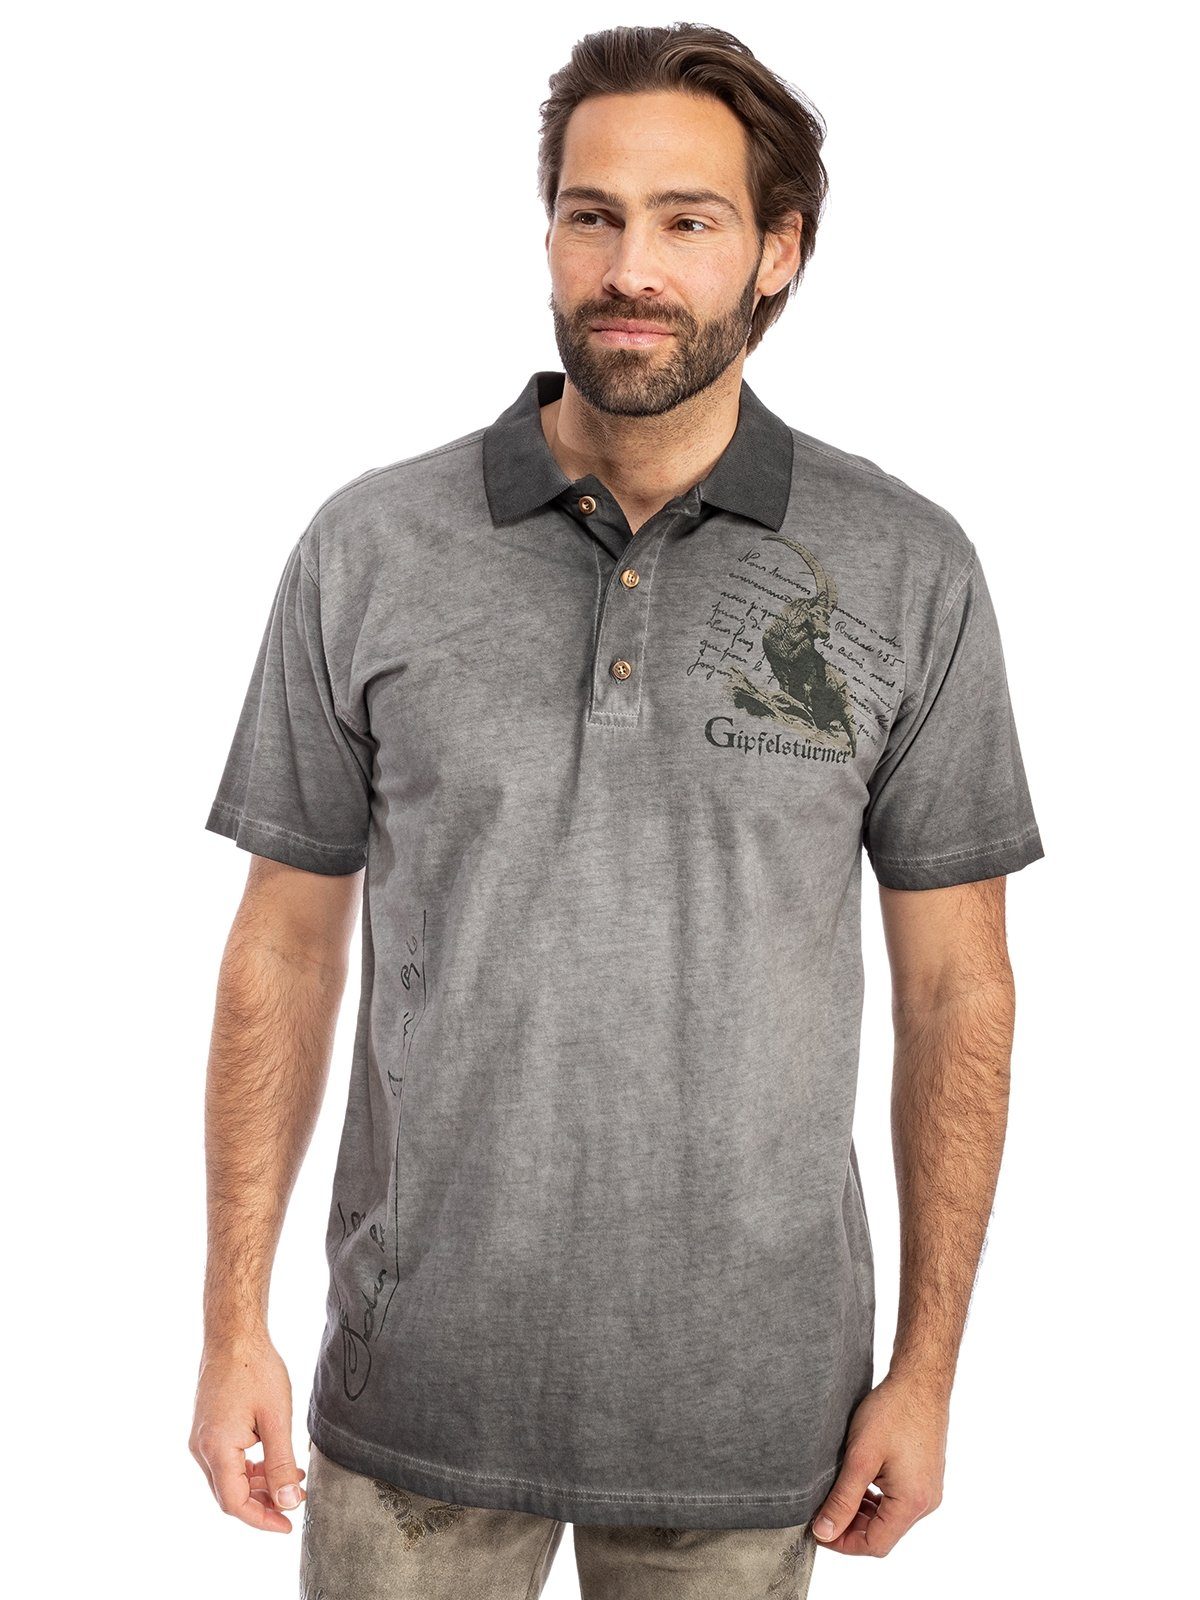 WEITENAU T-Shirt Poloshirt Gipfelstürmer anthrazit